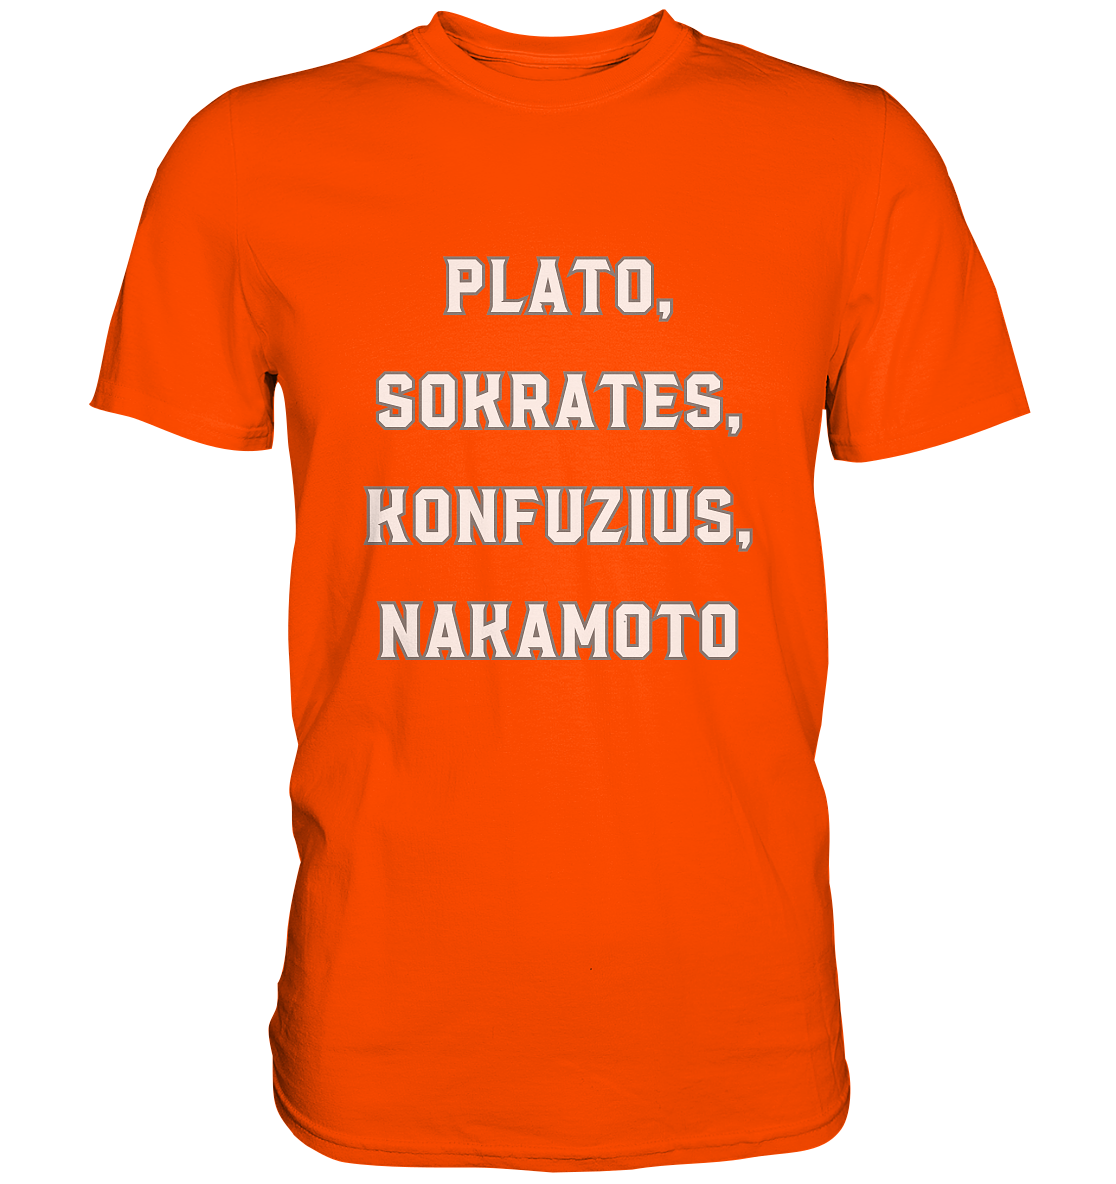 PLATO, SOKRATES, KONFUZIUS, NAKAMOTO - Ladies Collection - Premium Shirt